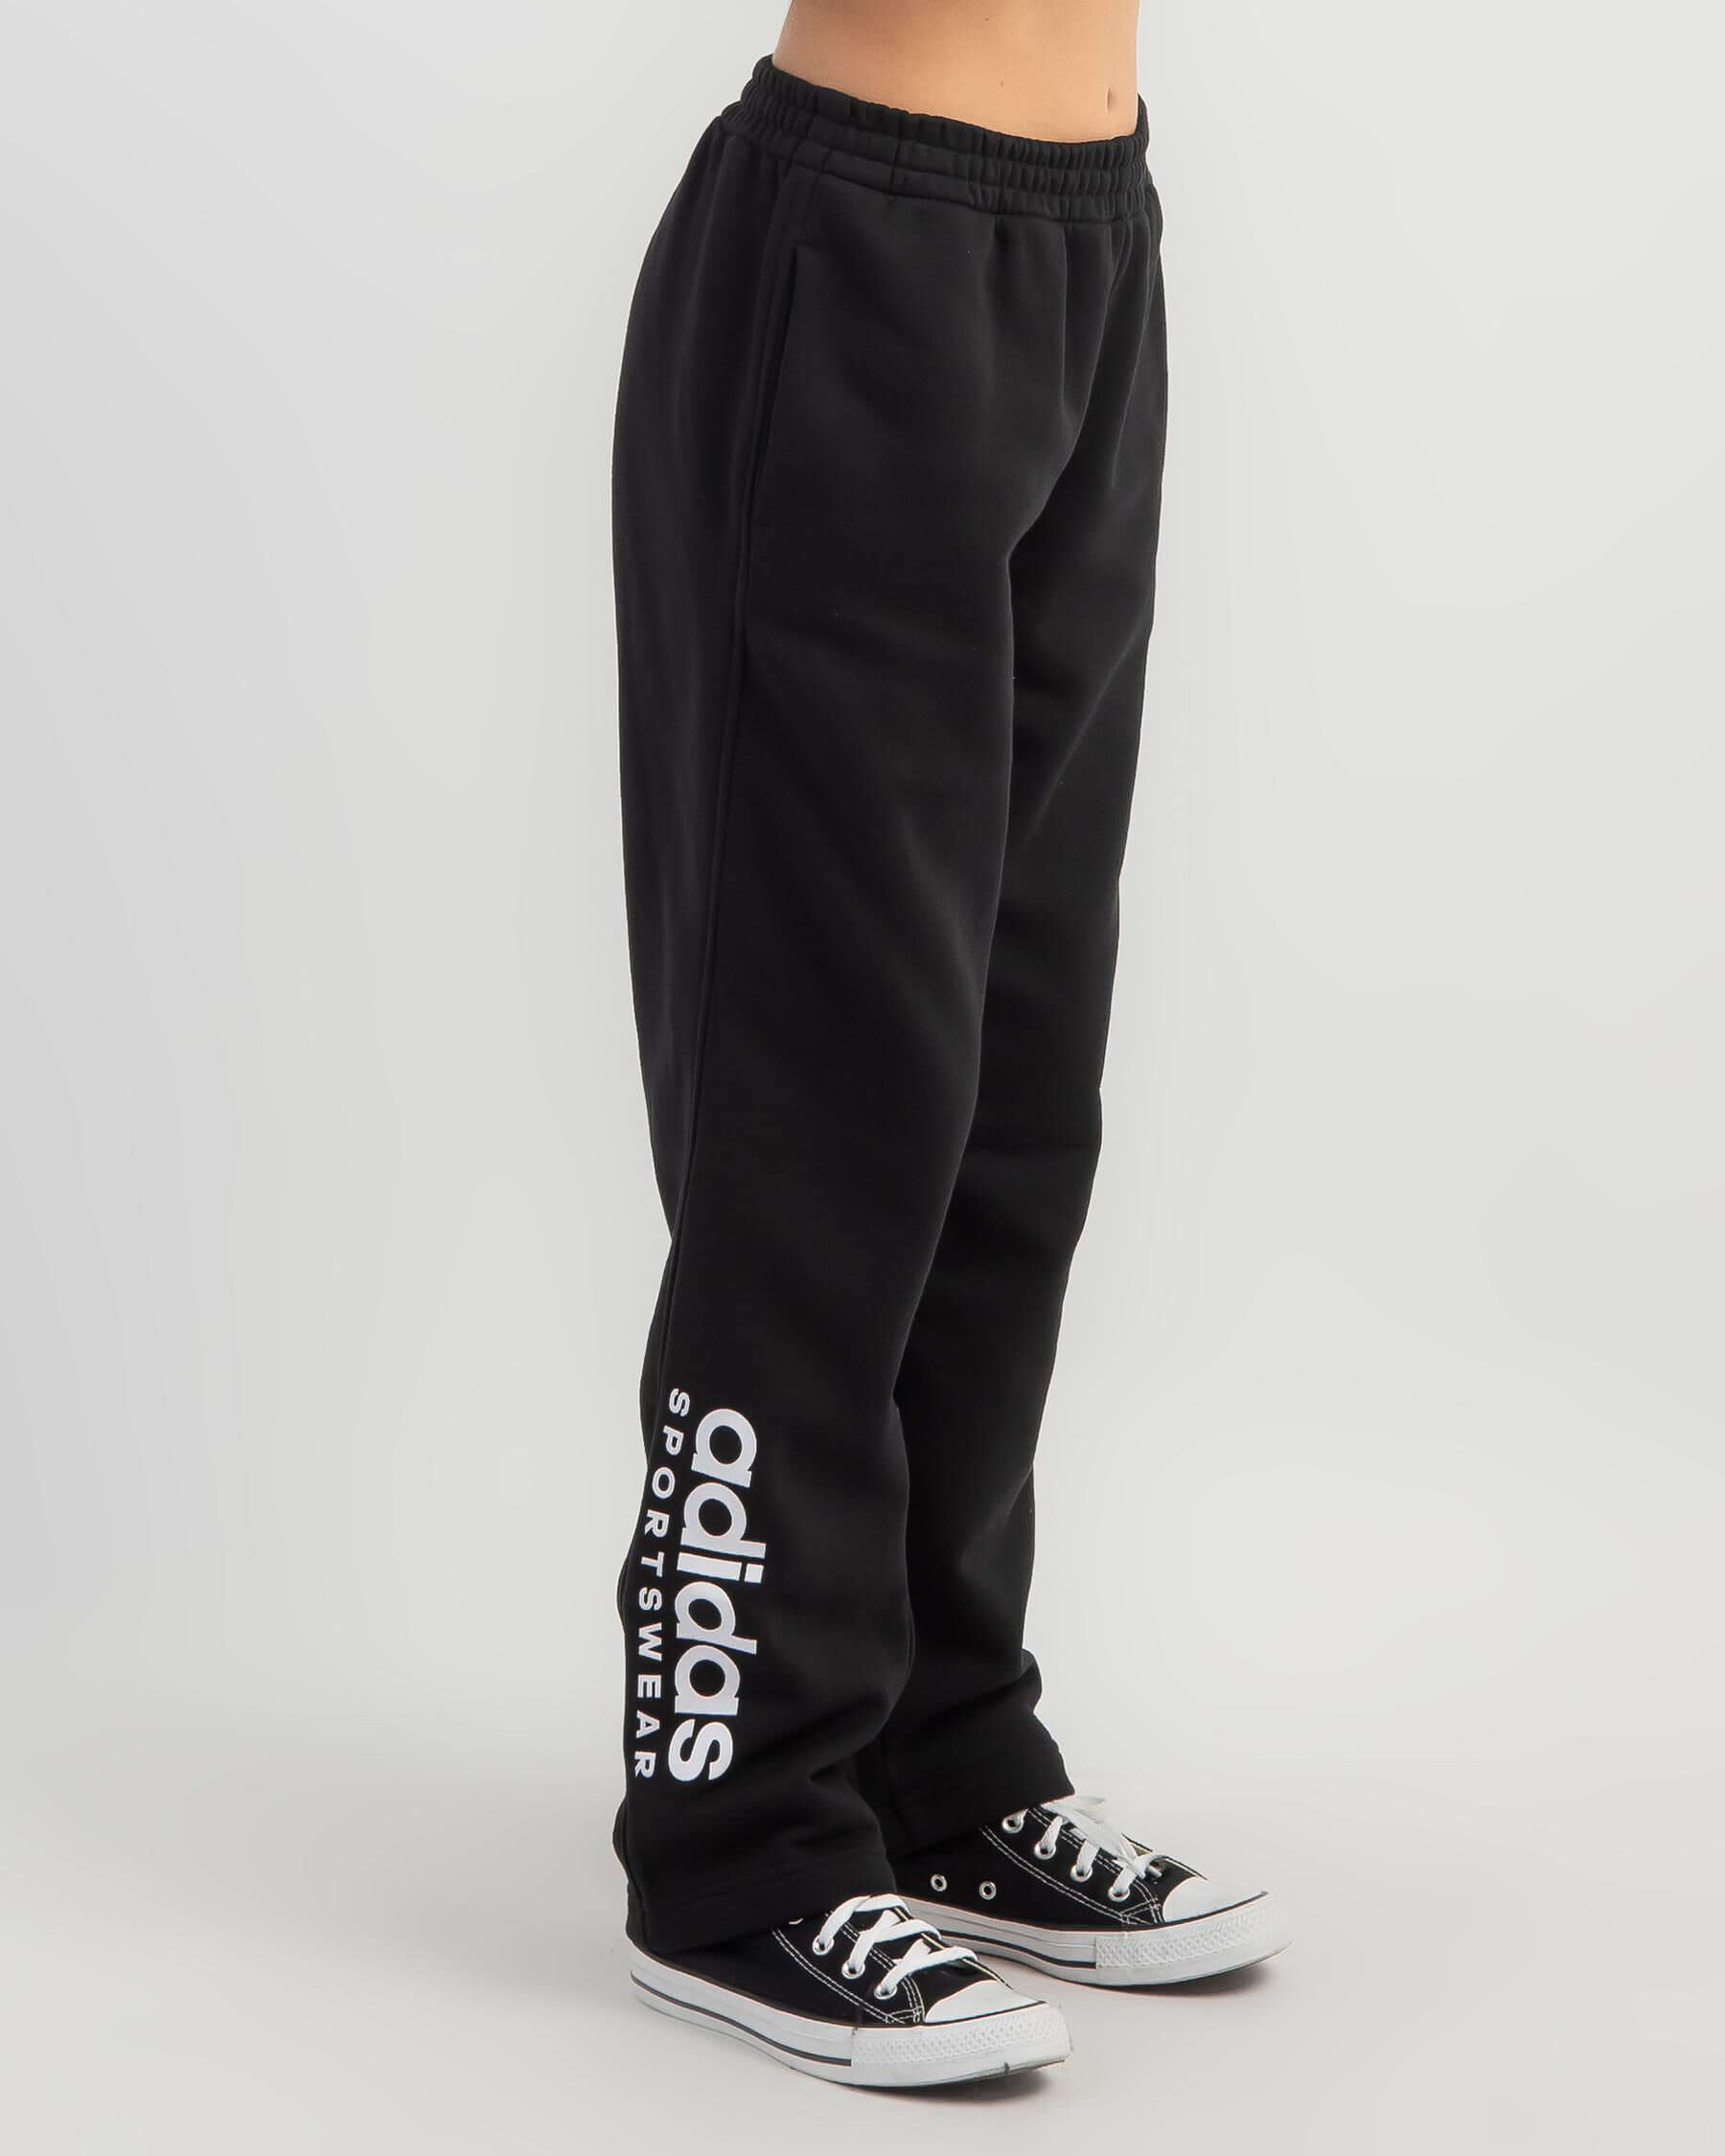 Adidas Girls Size 14 Large Classic Black White 3 Stripes Track Pants NWT  #22A 190444932323 | eBay